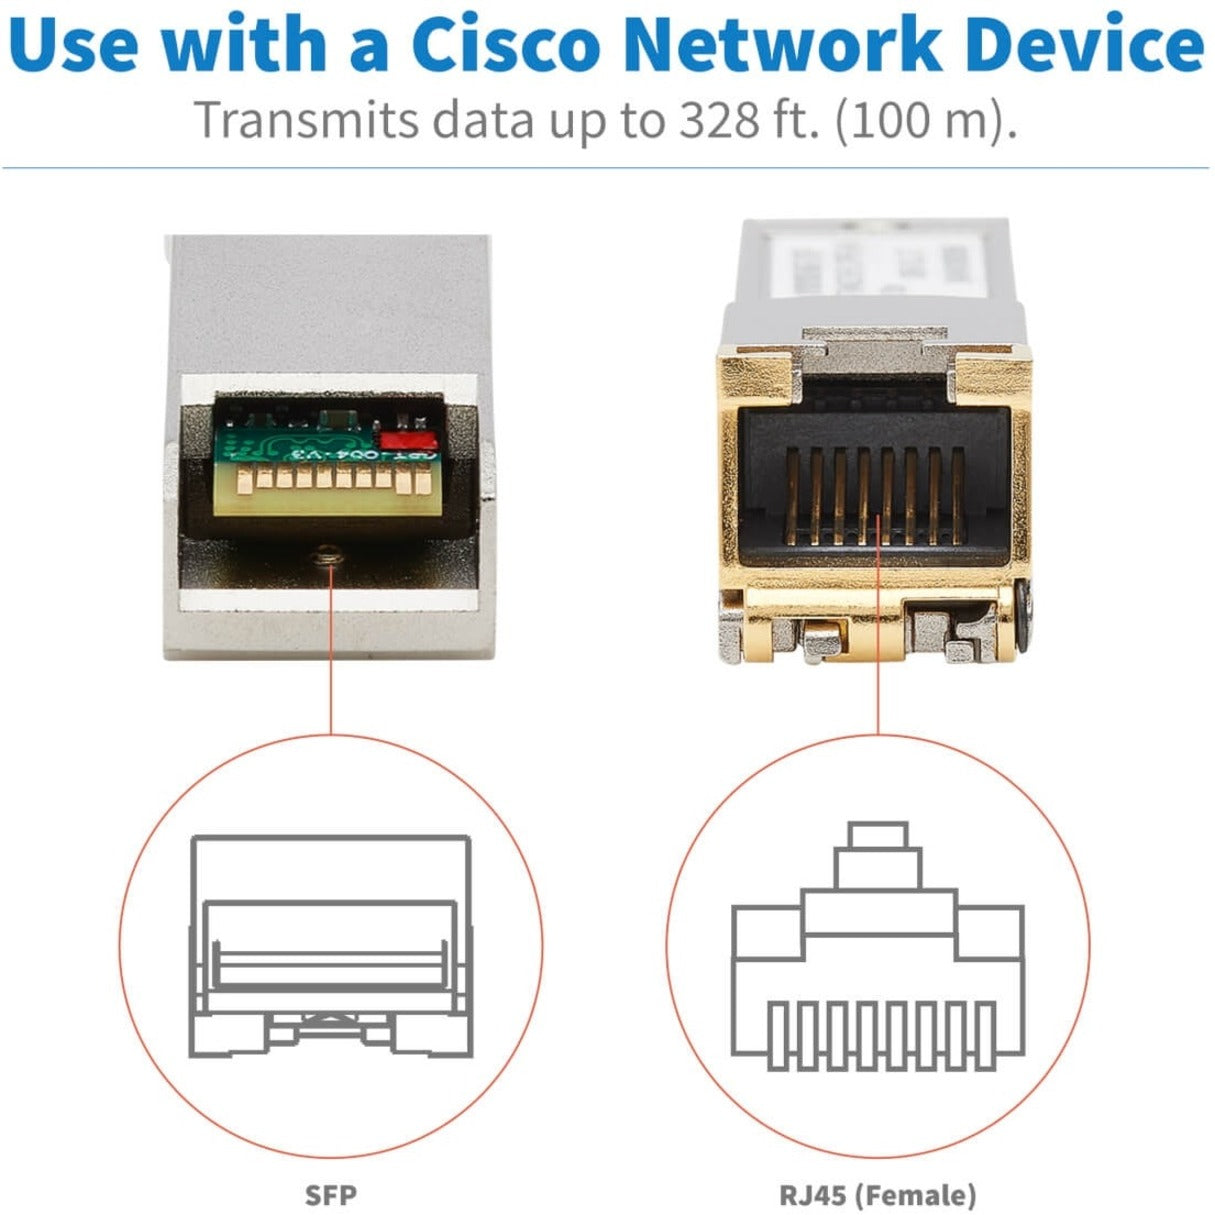 Tripp Lite N286-01GLC-TE Cisco SFP (mini-GBIC) Modul 1000Base-TX Gigabit Ethernet Twisted Pair Hot-swappable